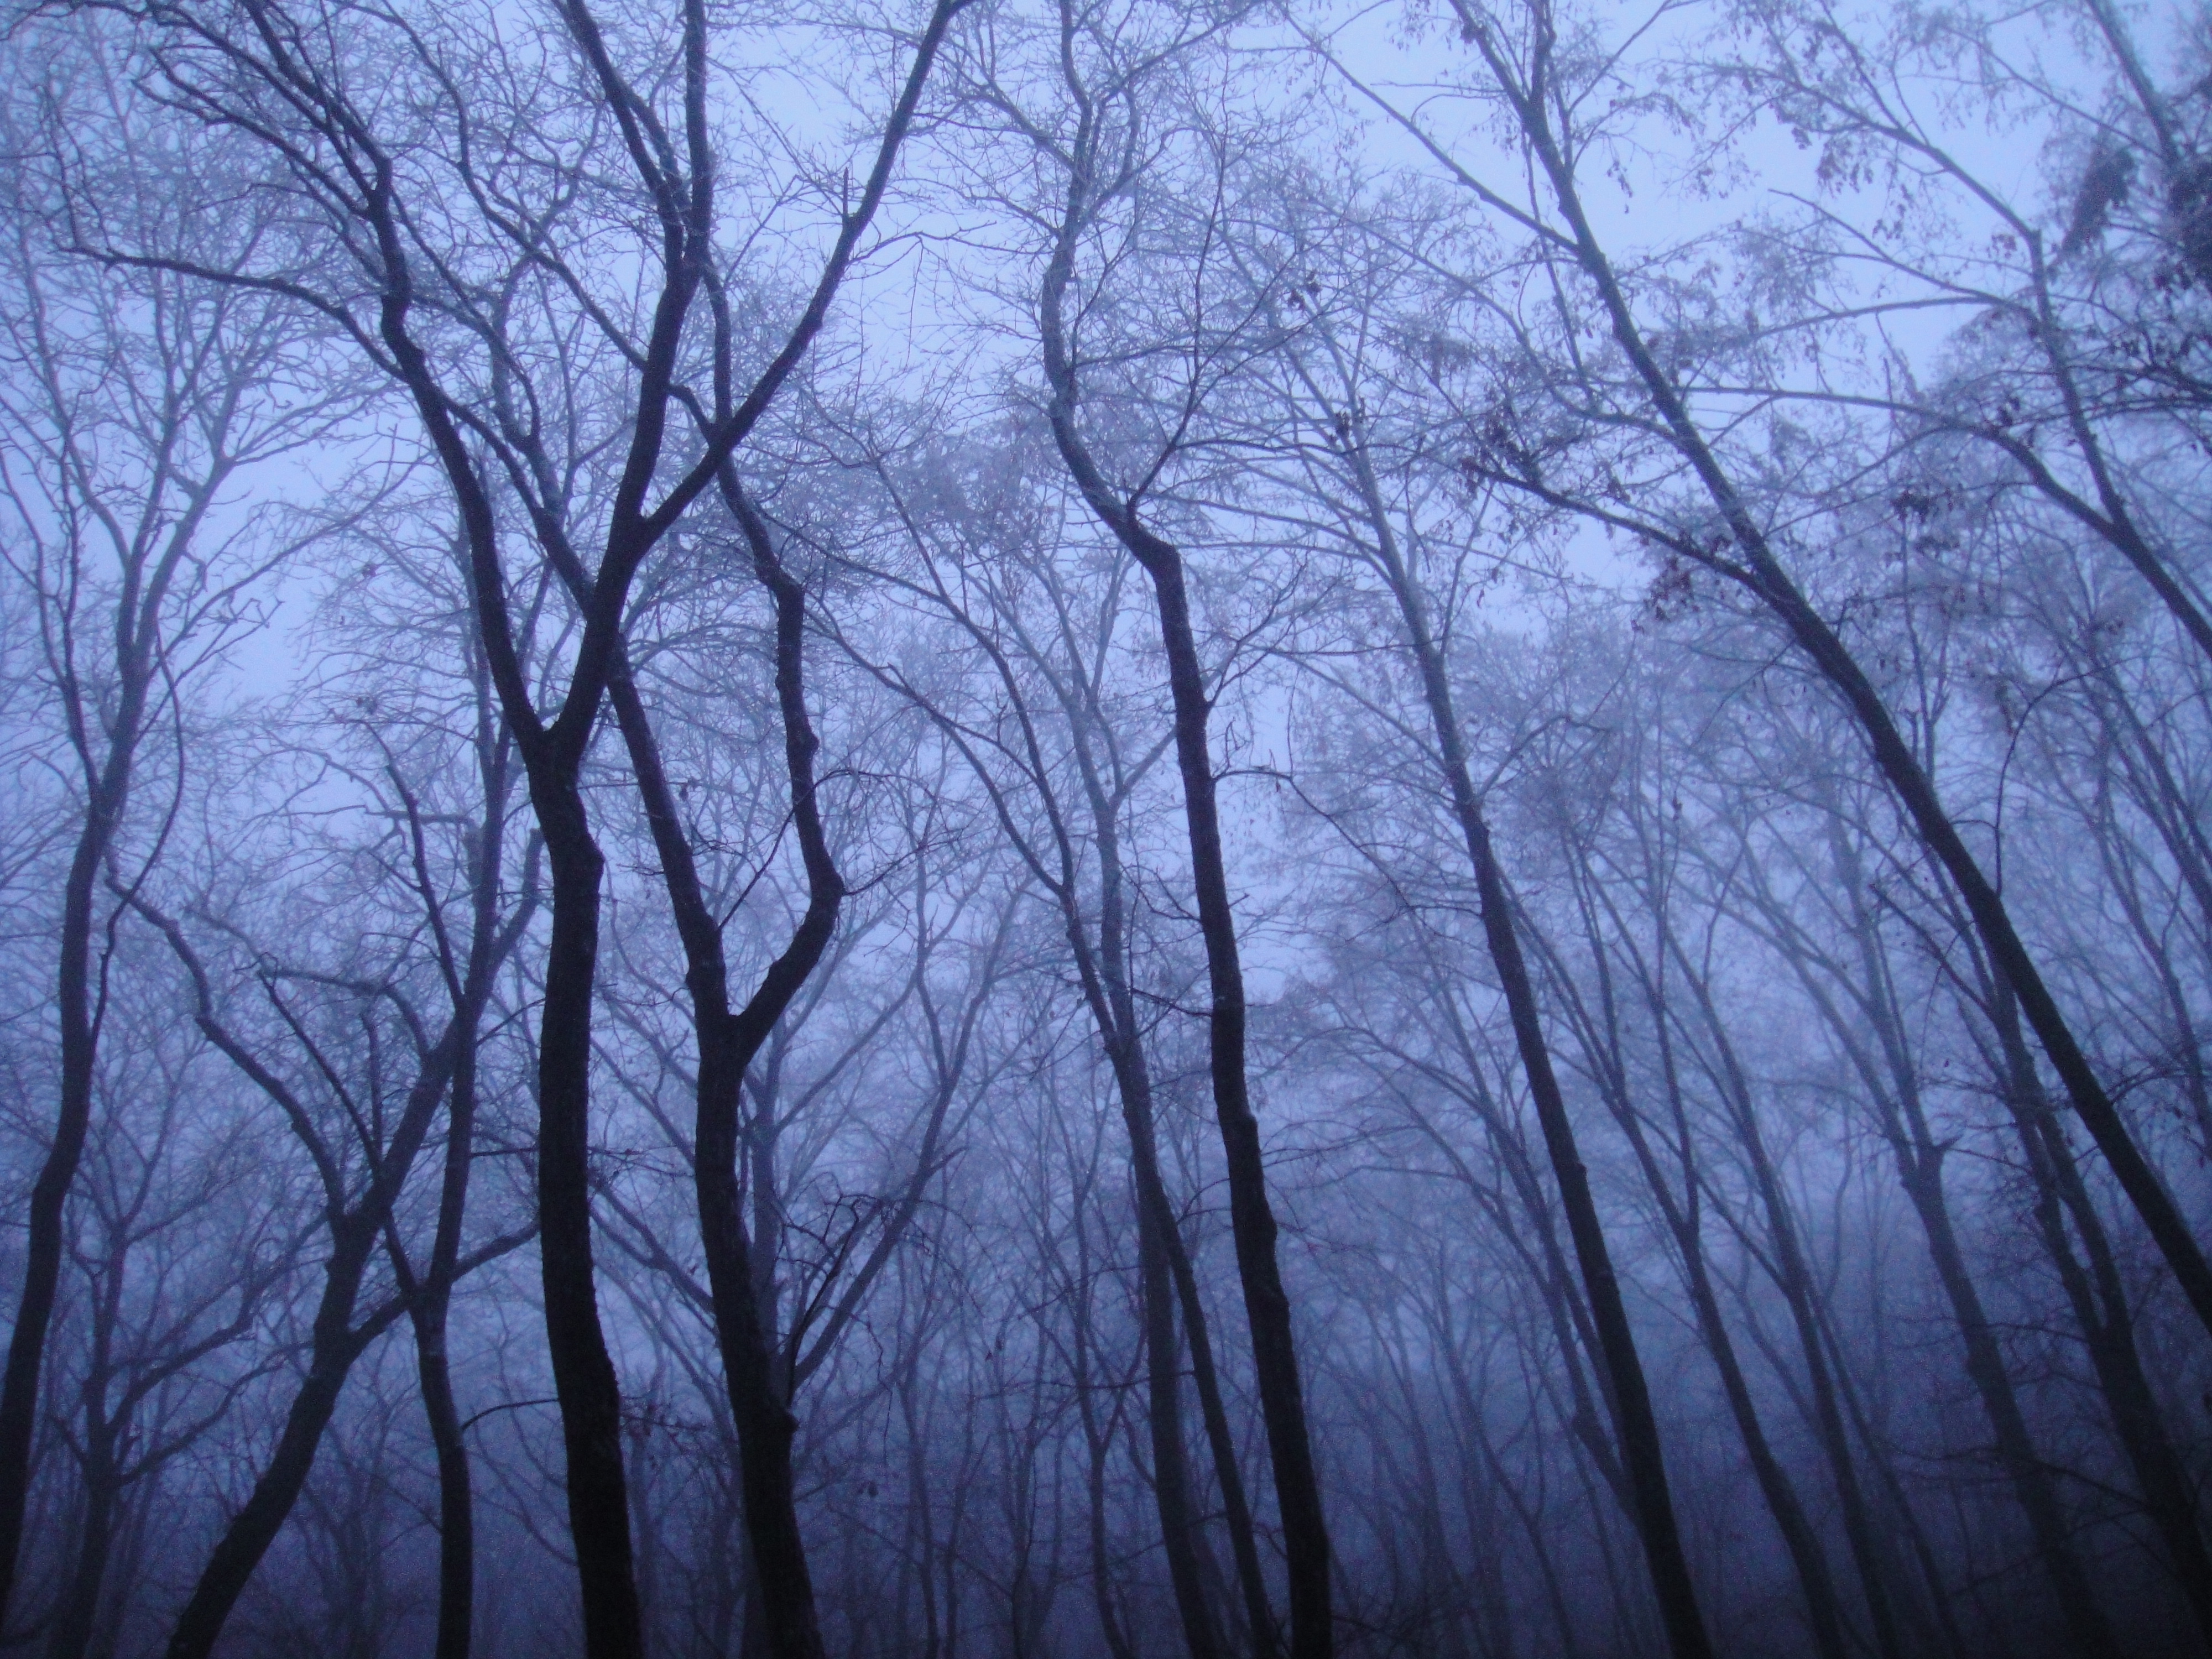 Photos Of The Day: A Misty, Frozen Romanian Forest | The Velvet Rocket